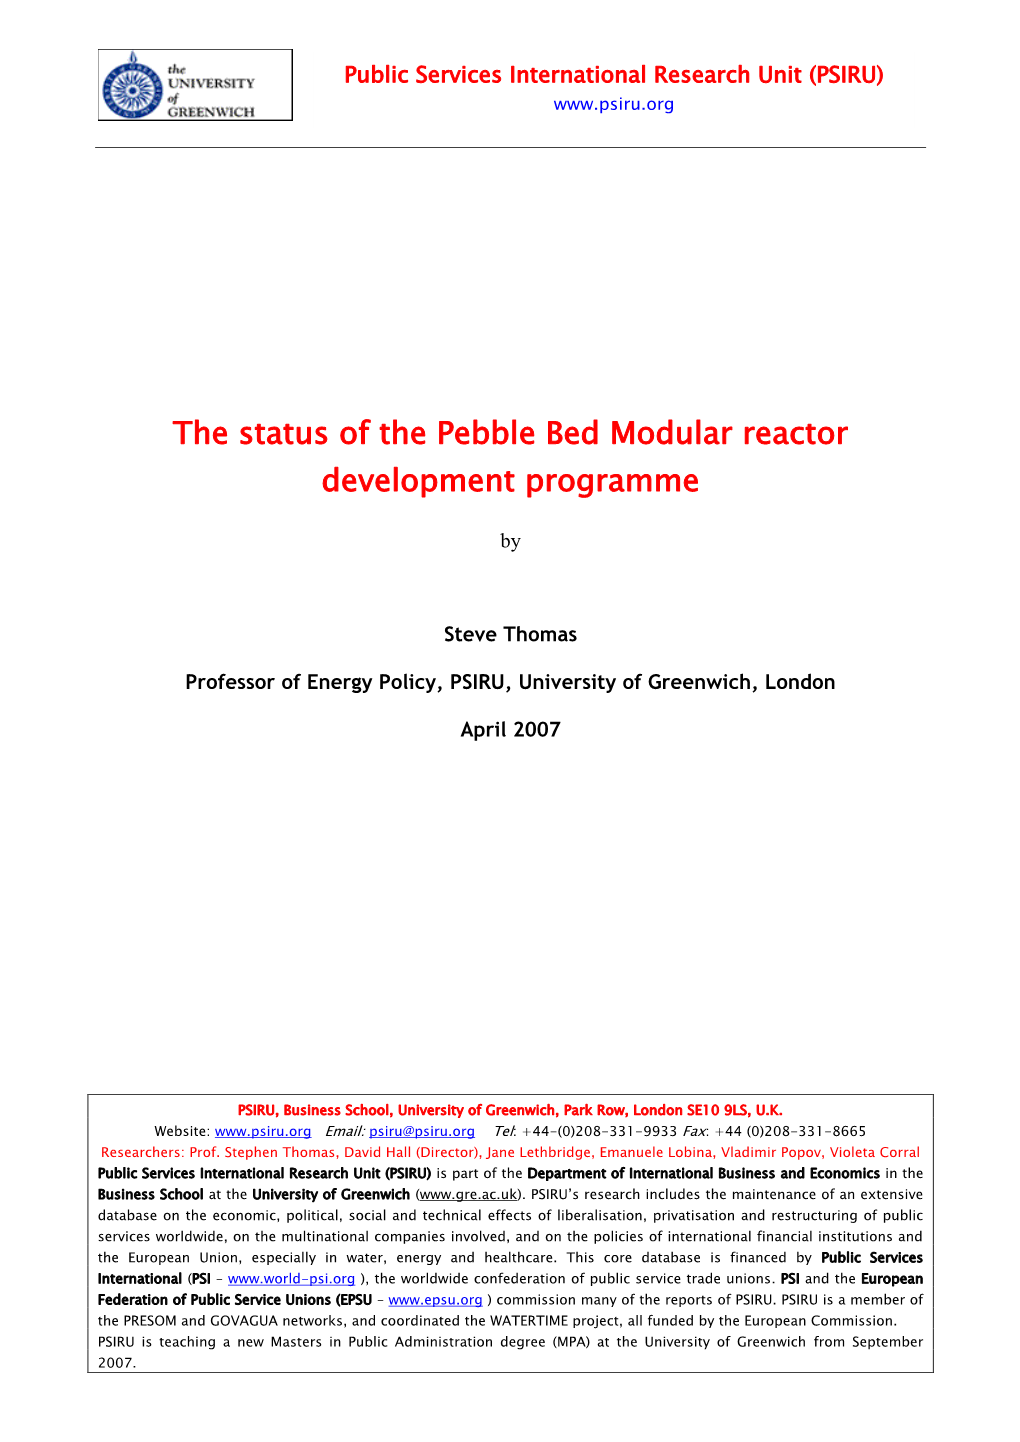 The Status of the Pebble Bed Modular Reactor Development Programme